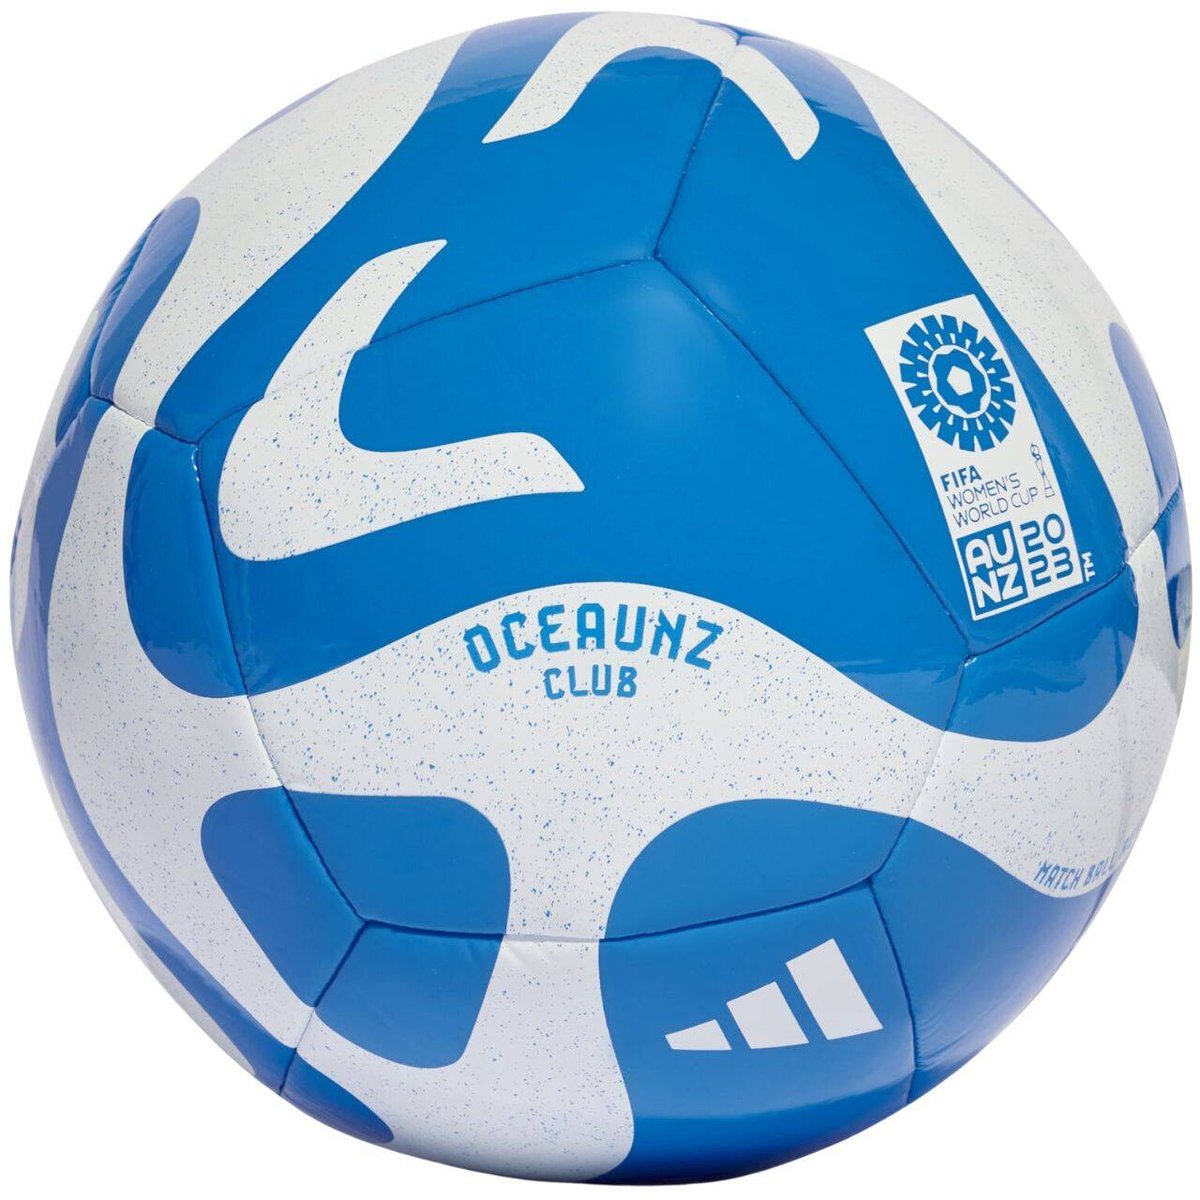 Piłka nożna adidas Oceaunz Club biało-niebieska HZ6933-4